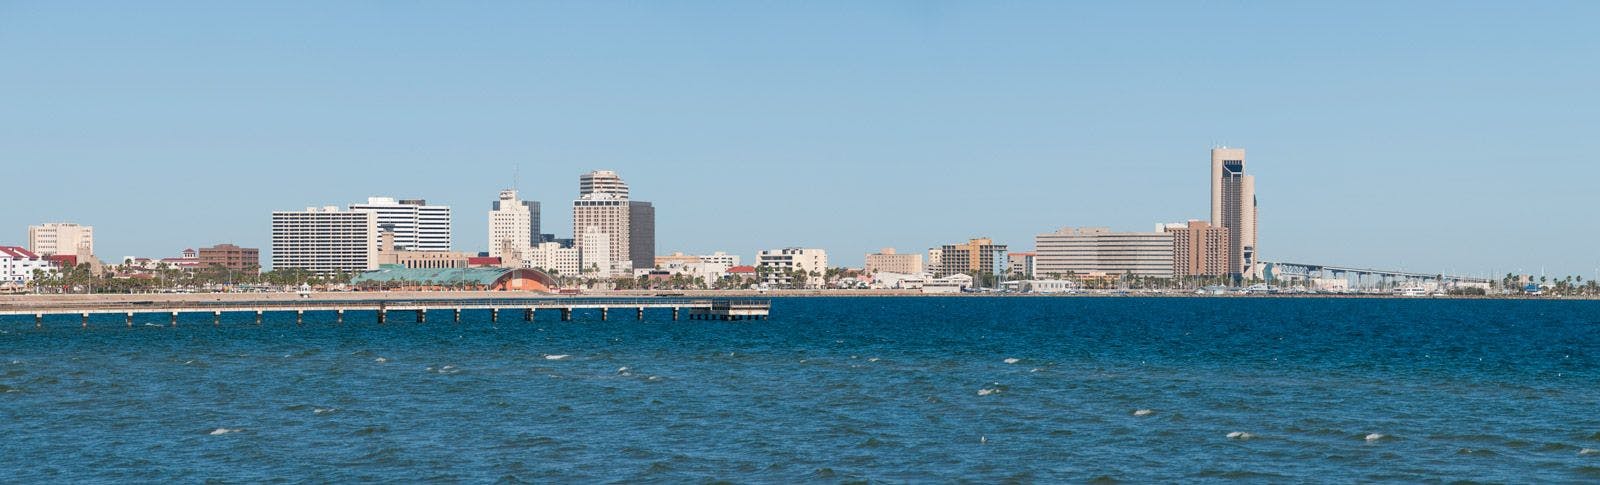 Corpus Christi city skyline